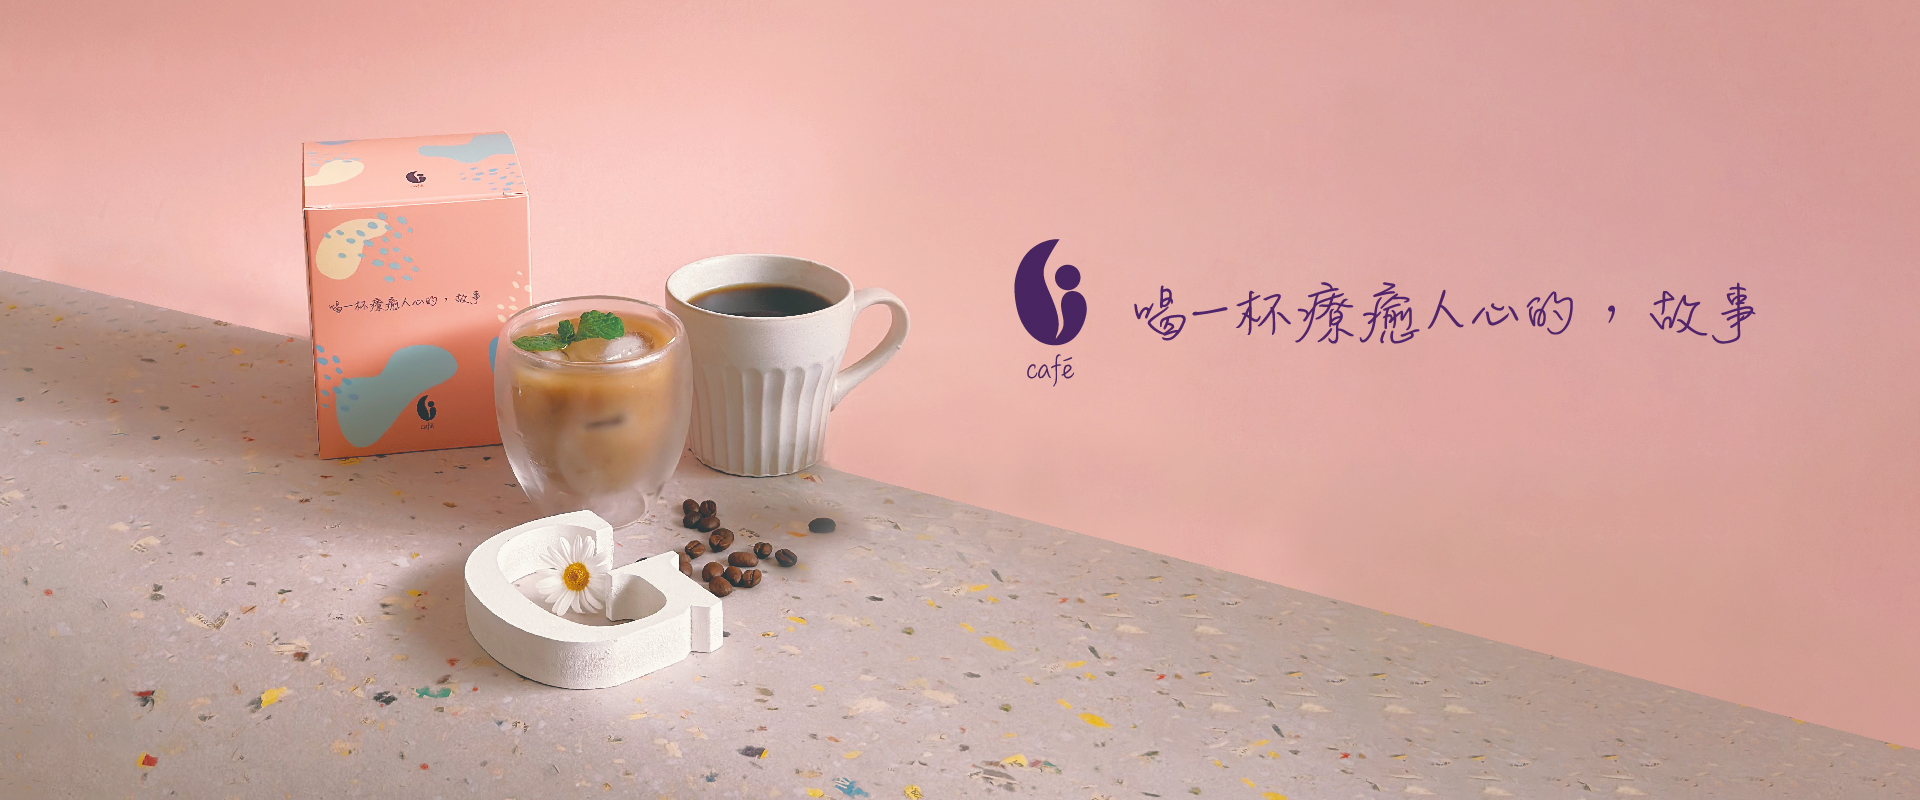 G G café 喝一杯療癒人心的故事-2023